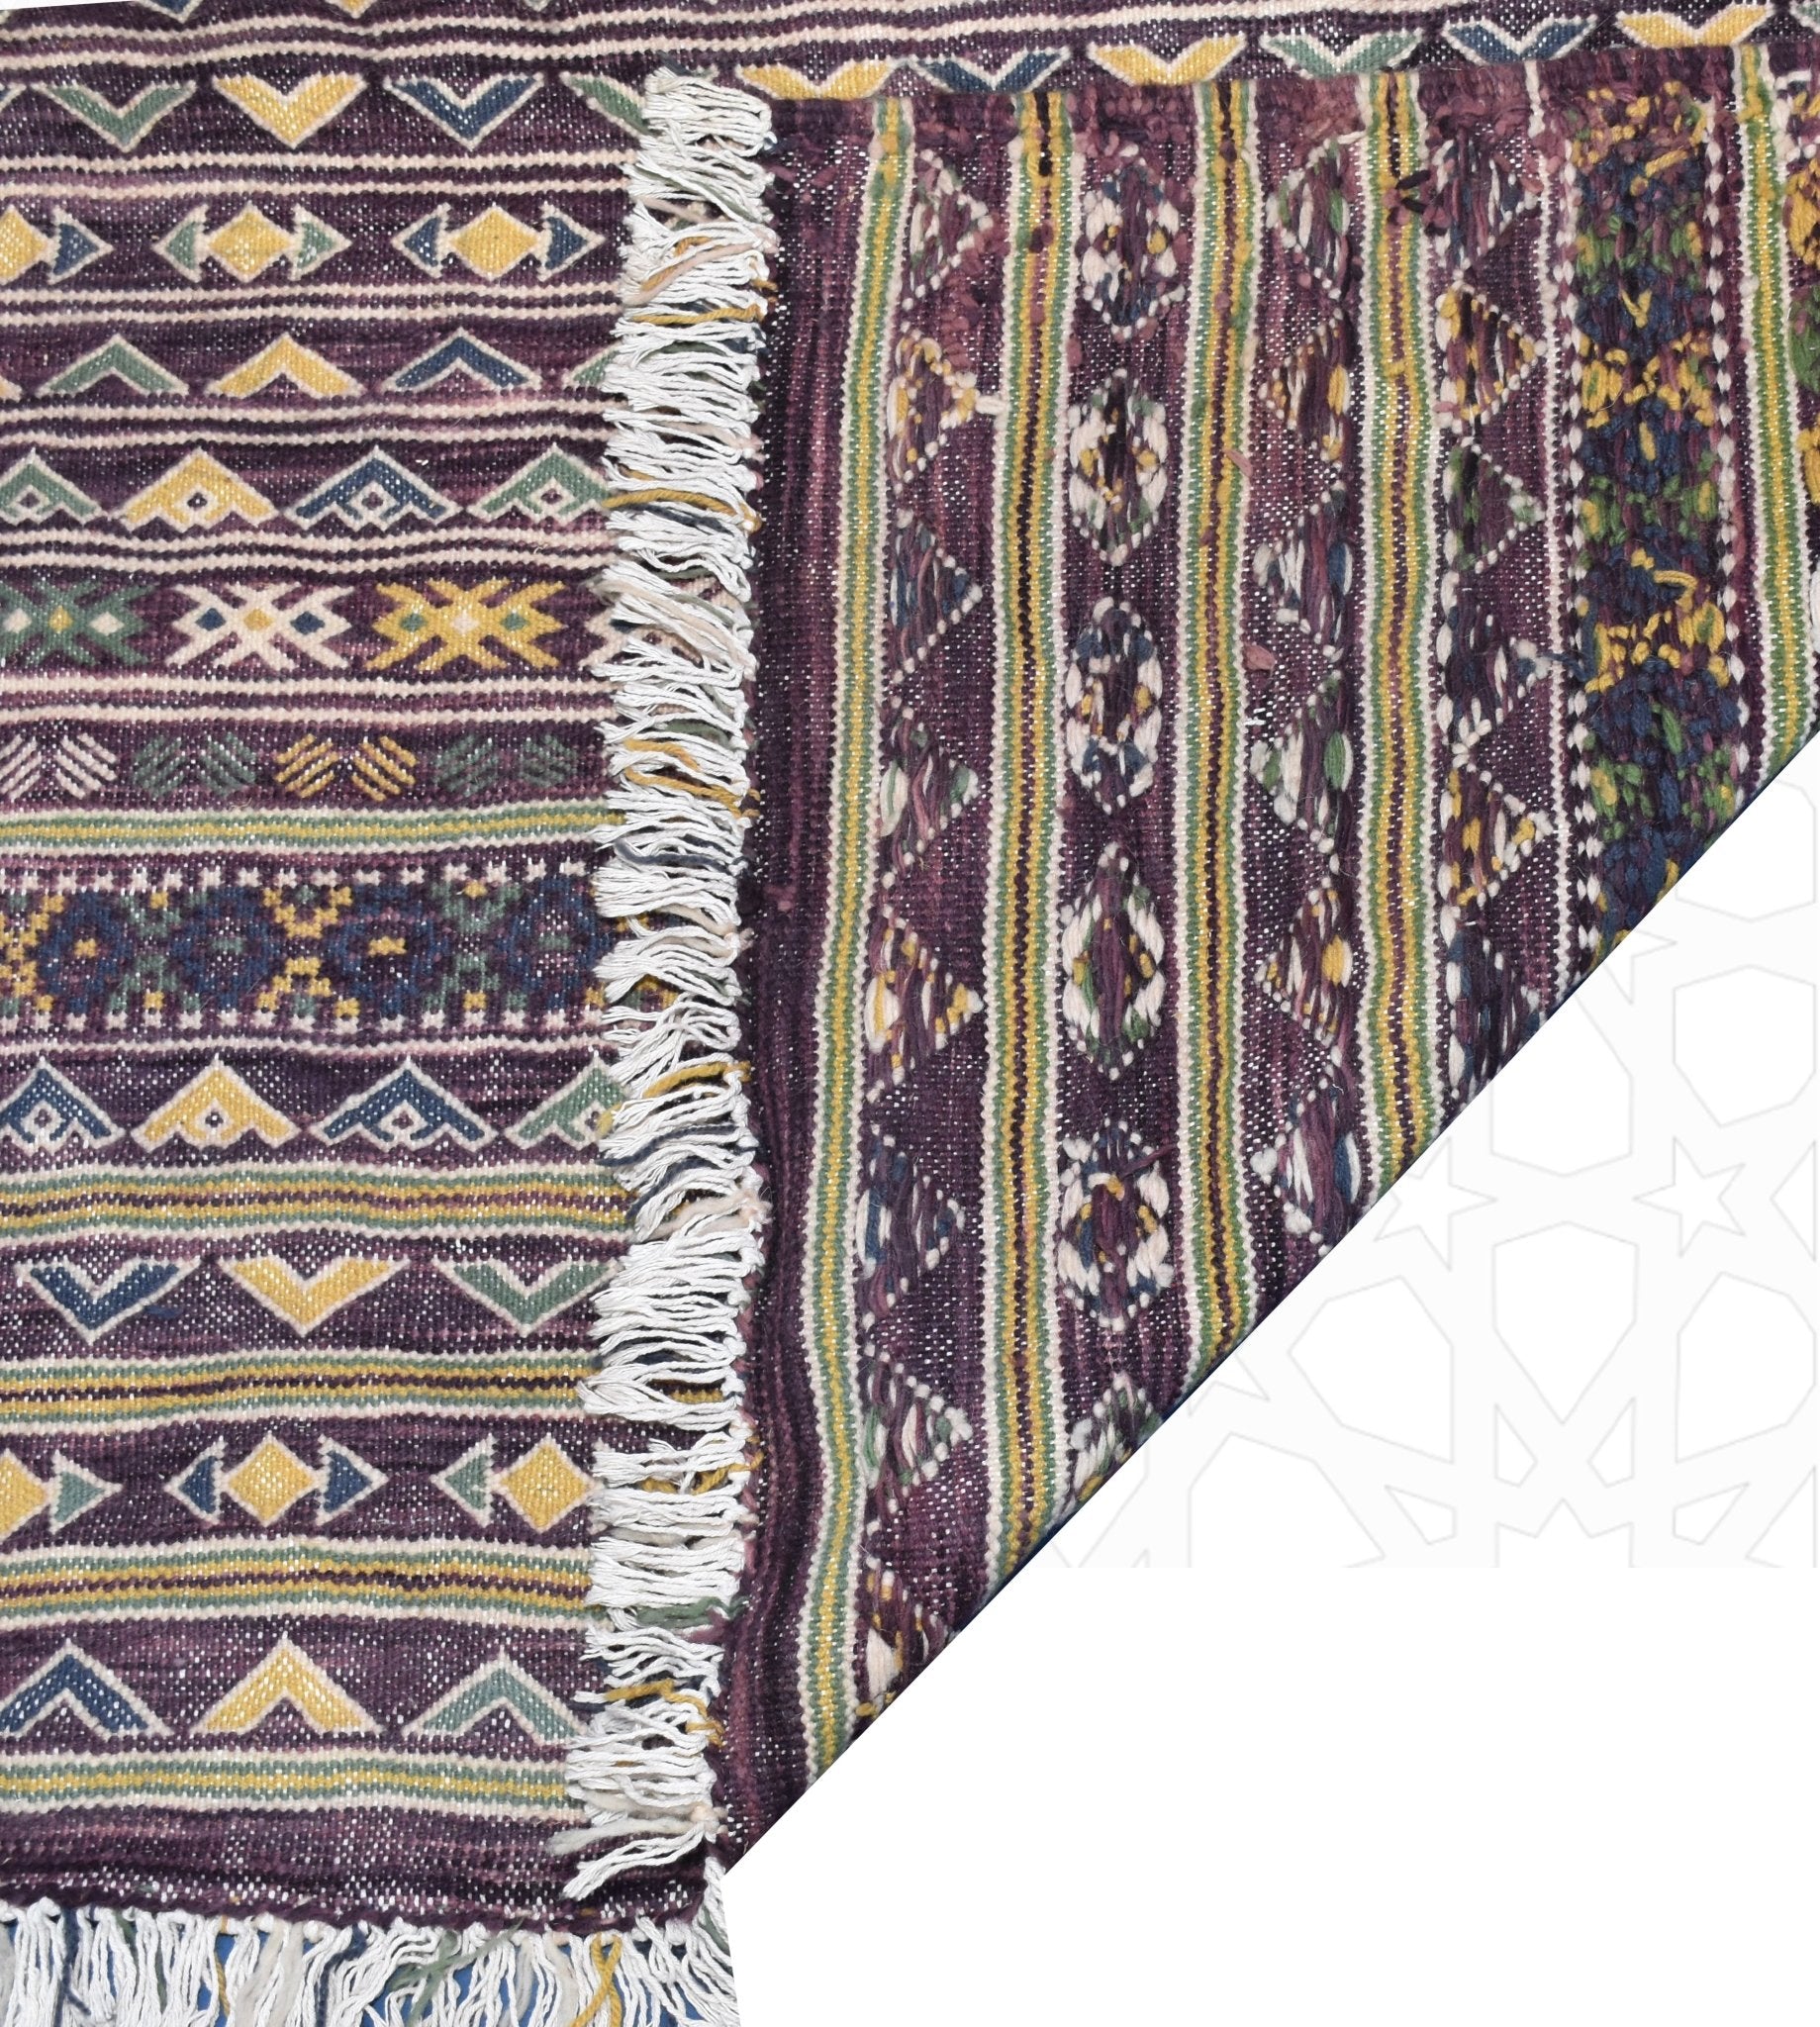 Flatweave kilim hanbal Moroccan rug - 4.27 x 6.57 ft / 130 x 200 cm - Berbers Market